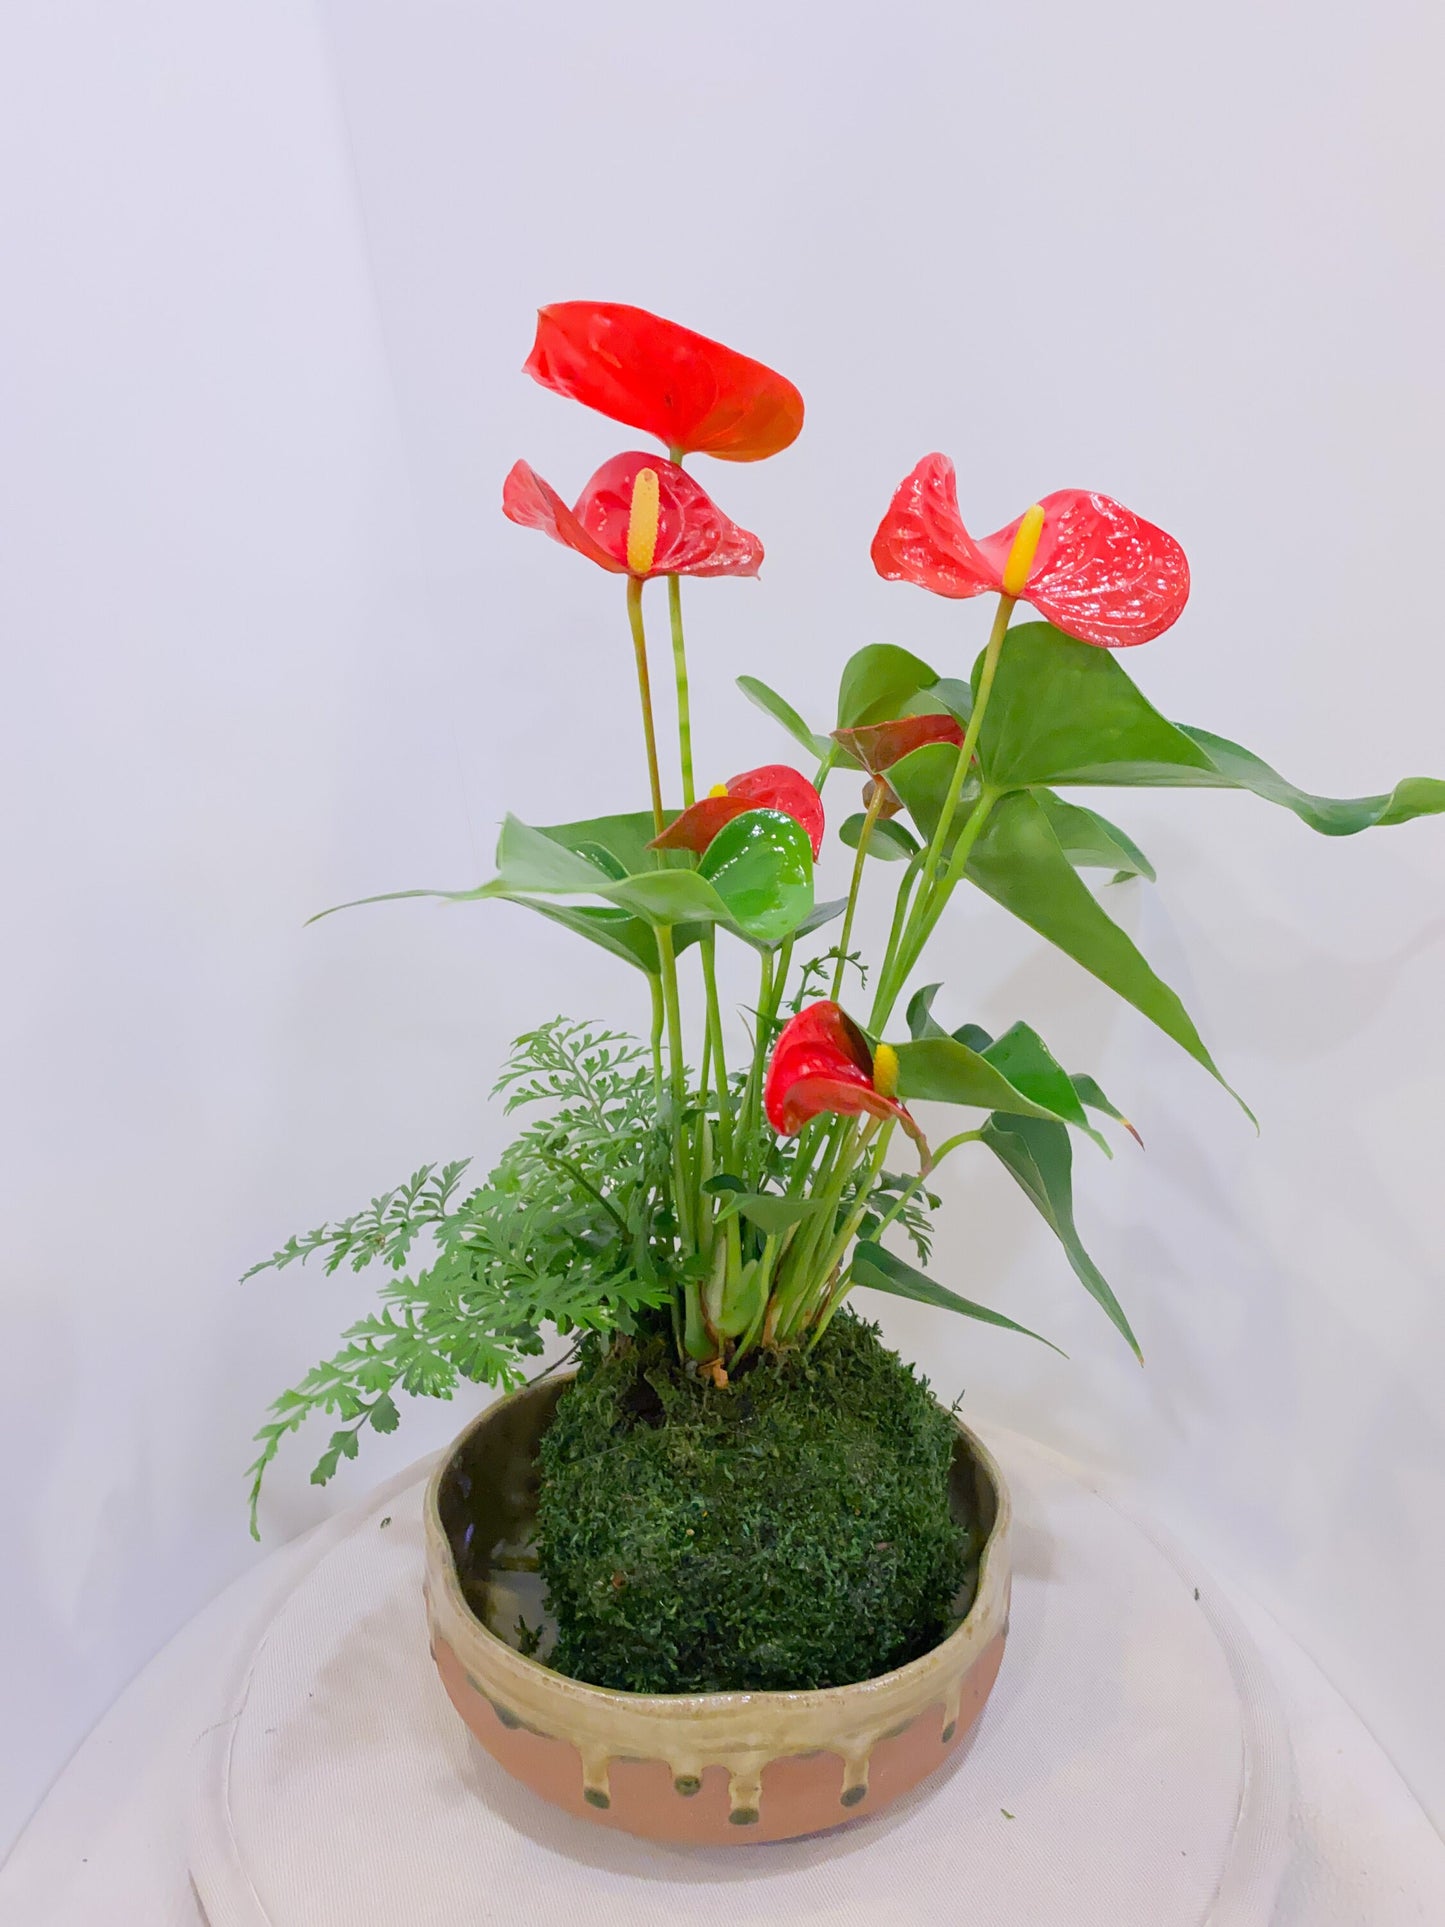 Anthurium and Fern arranged kokedama -- Bonsai Moss ball -  house decor with Japanese technique plants!